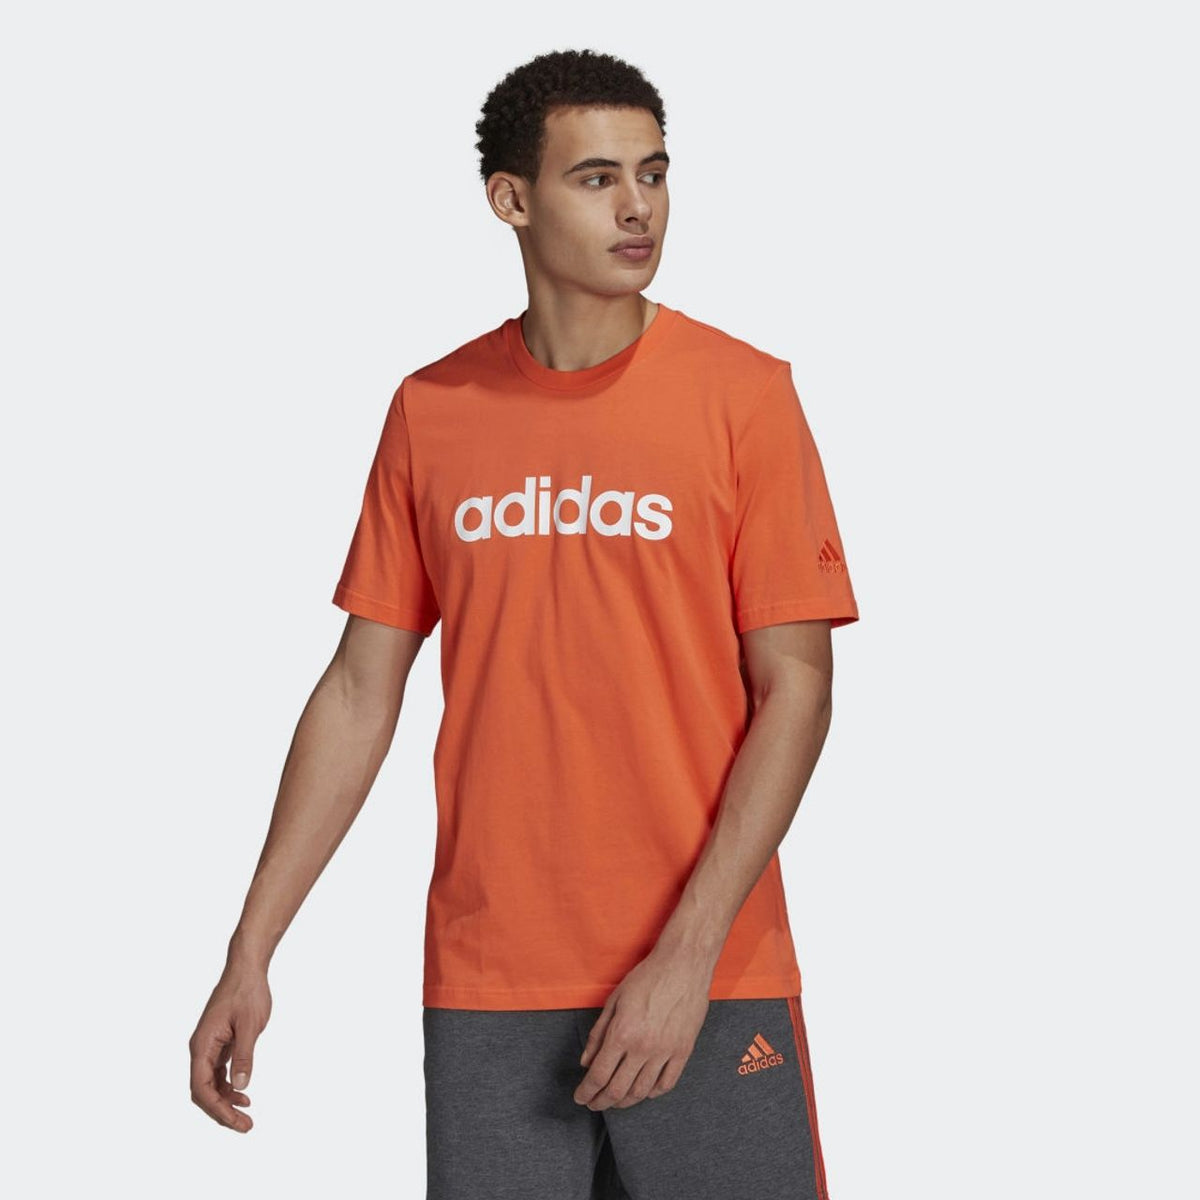 tradesports.co.uk Adidas Men's Essentials Linear T-Shirt GL0063